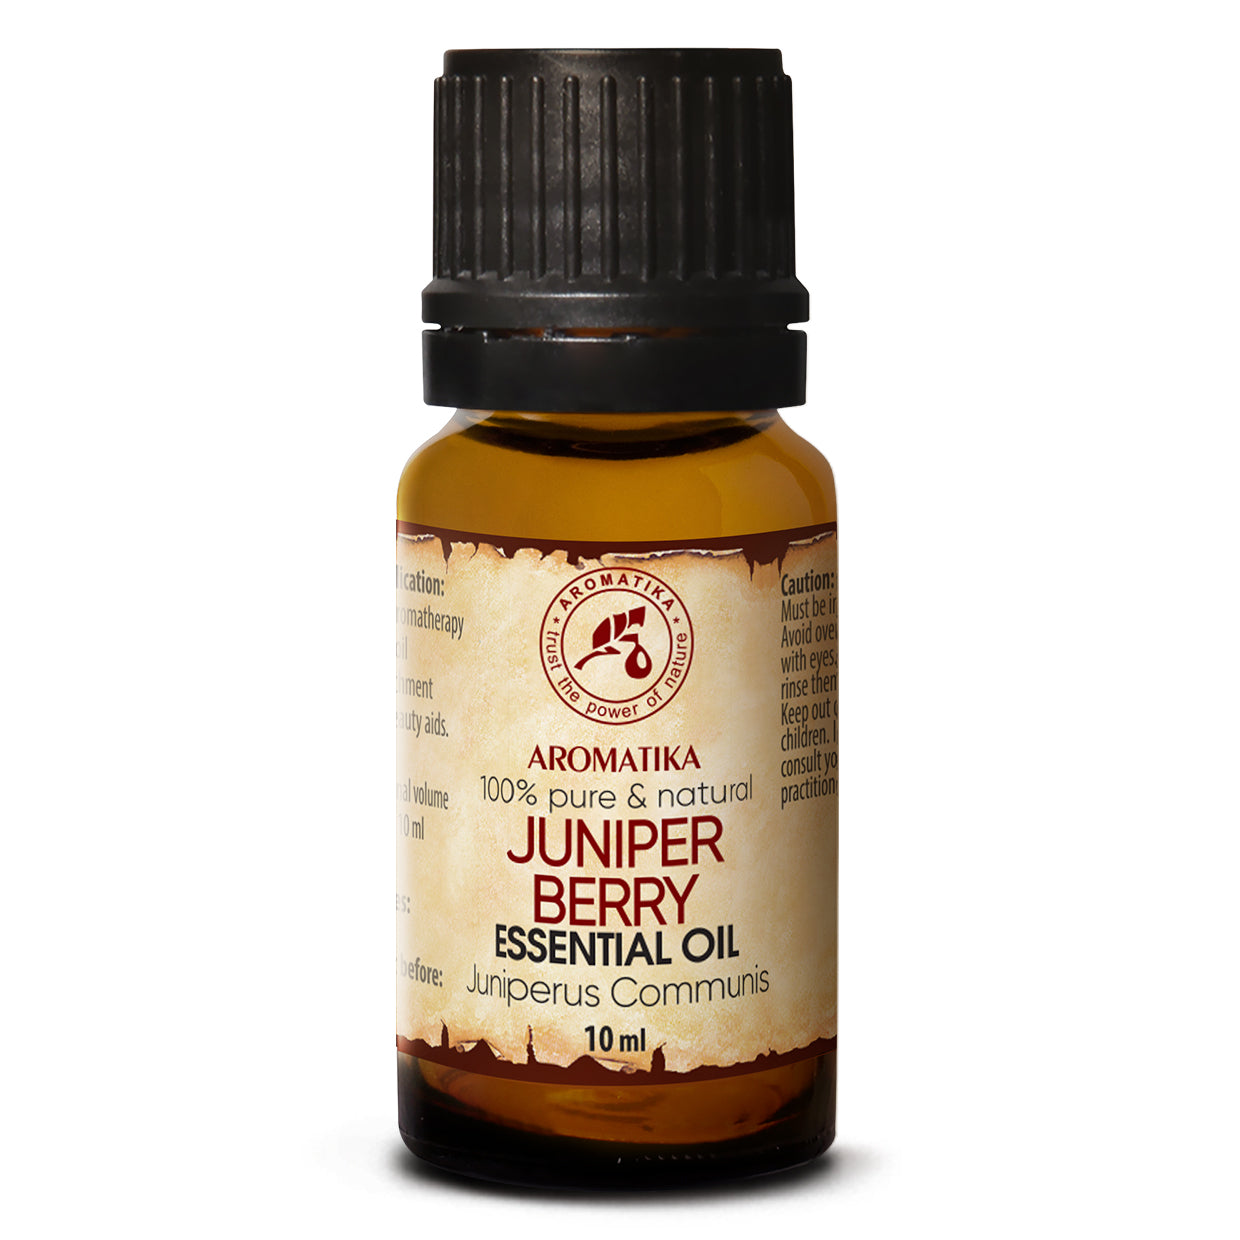 Juniper Berry Wild Tyrol Essential Oil